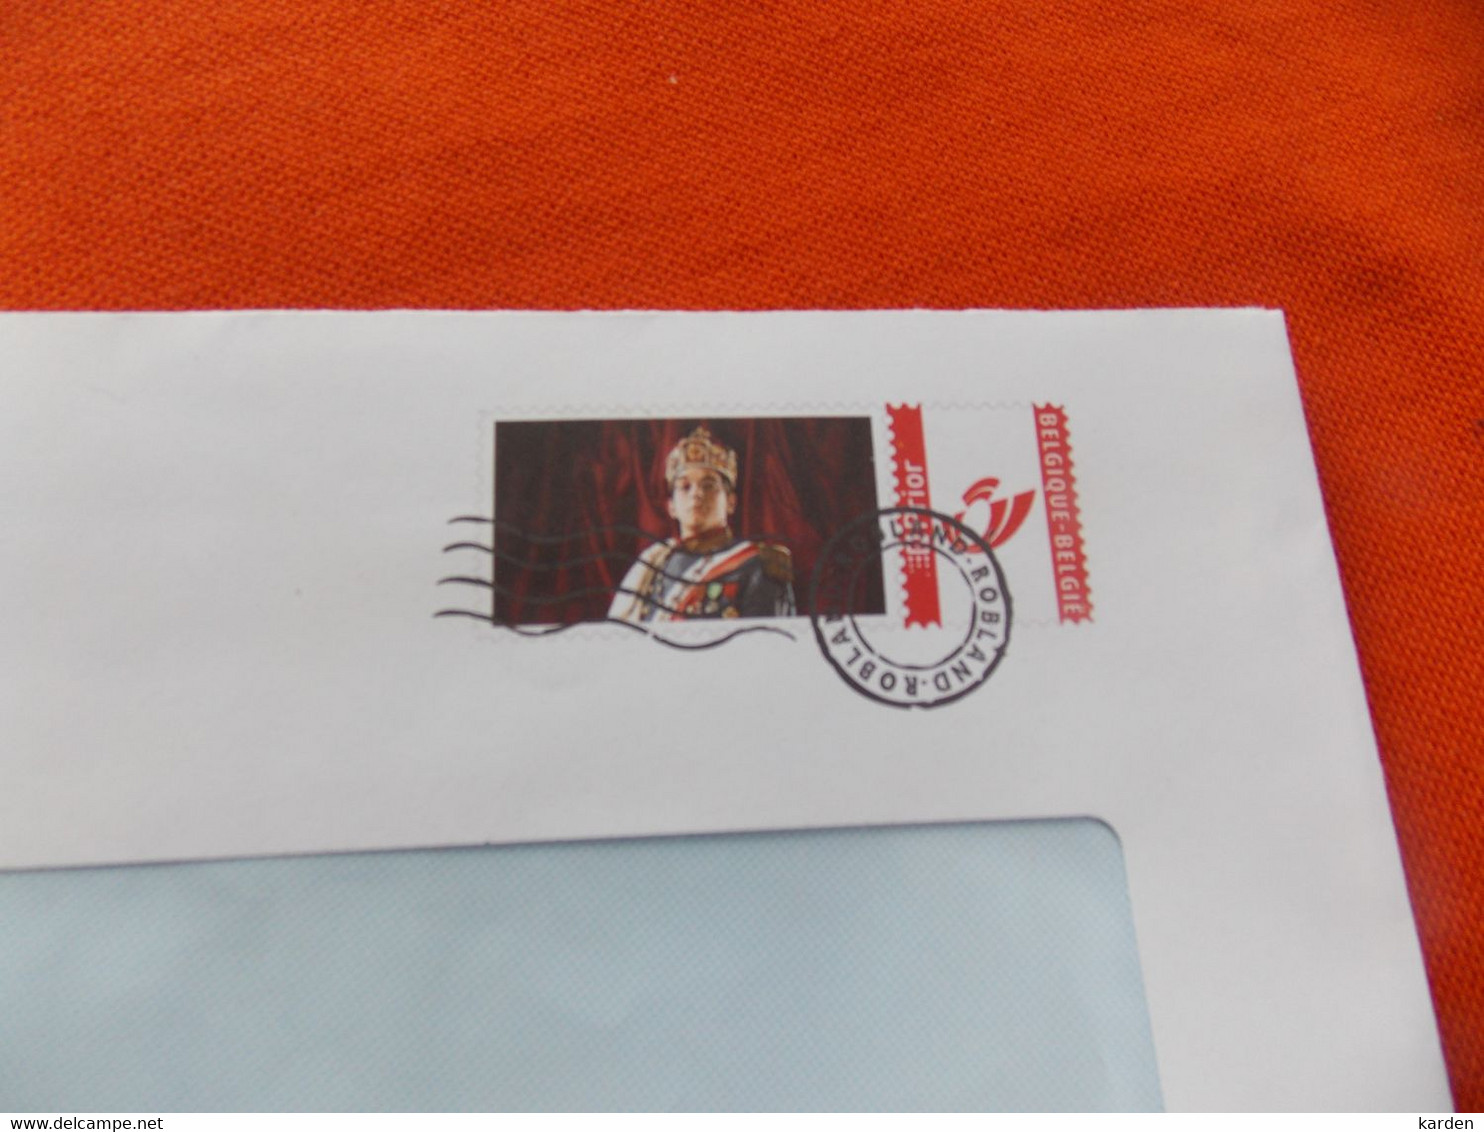 België Omslag A 4 Formaat Met Postzegel En Priorzegel Robland, - Covers